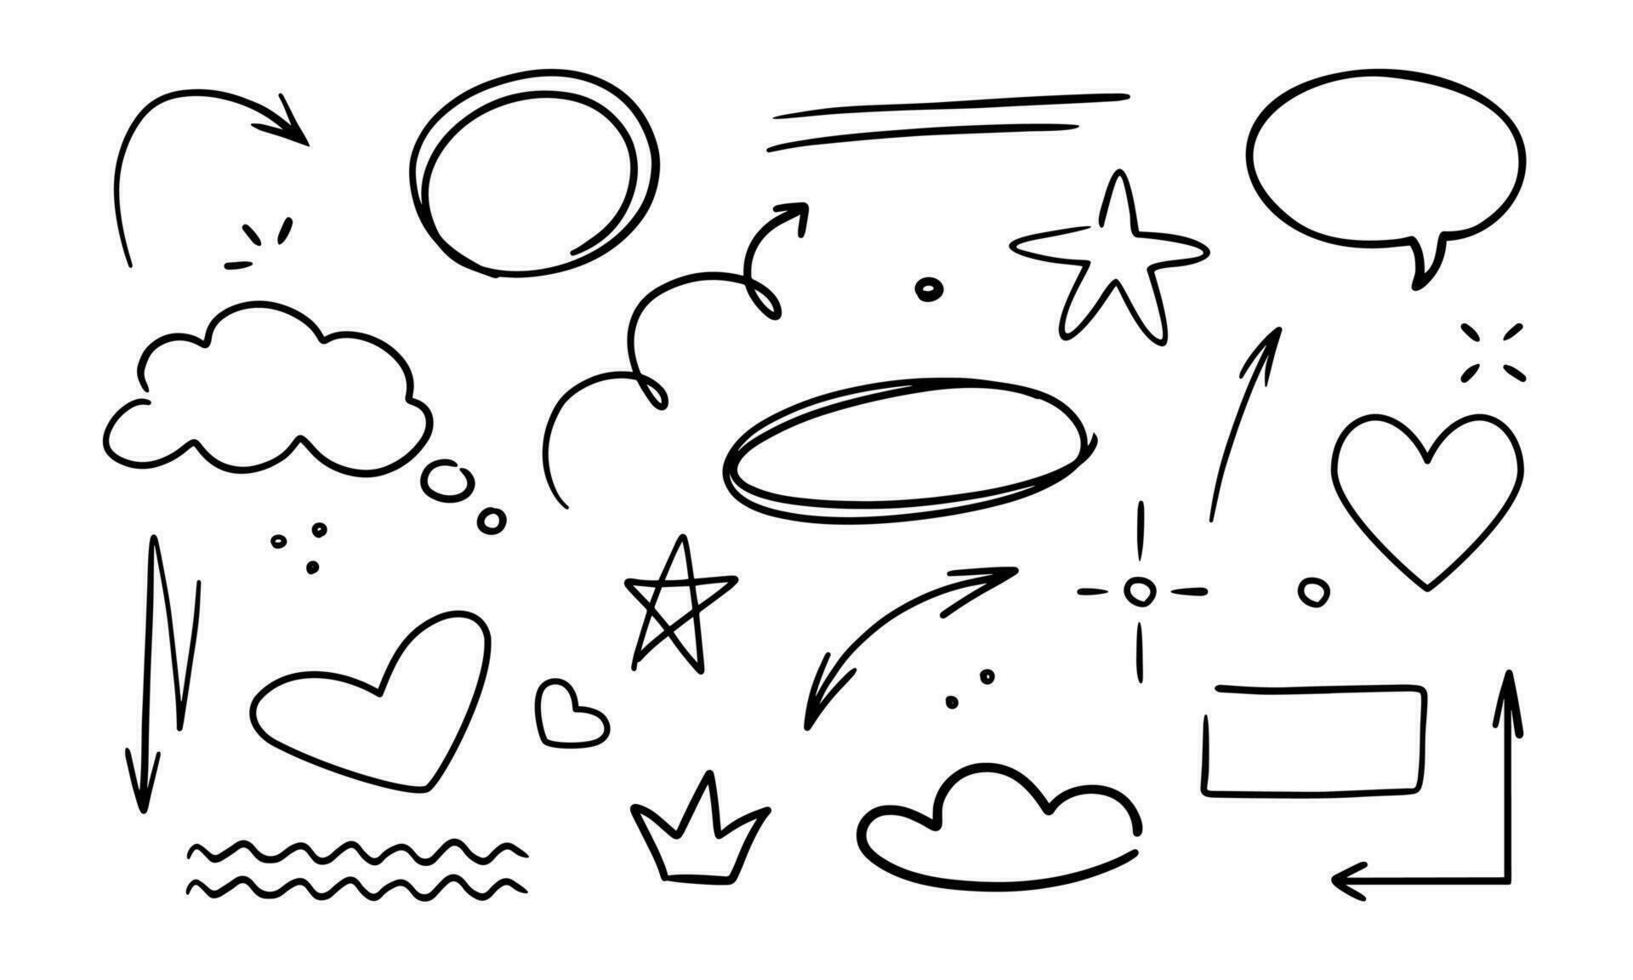 Doodle glitter pen line elements on a white background. Doodle heart, arrow, star, emphasis, speech bubble, sparkle element set icon. Simple sketch line style emphasis, attention, pattern elements. vector